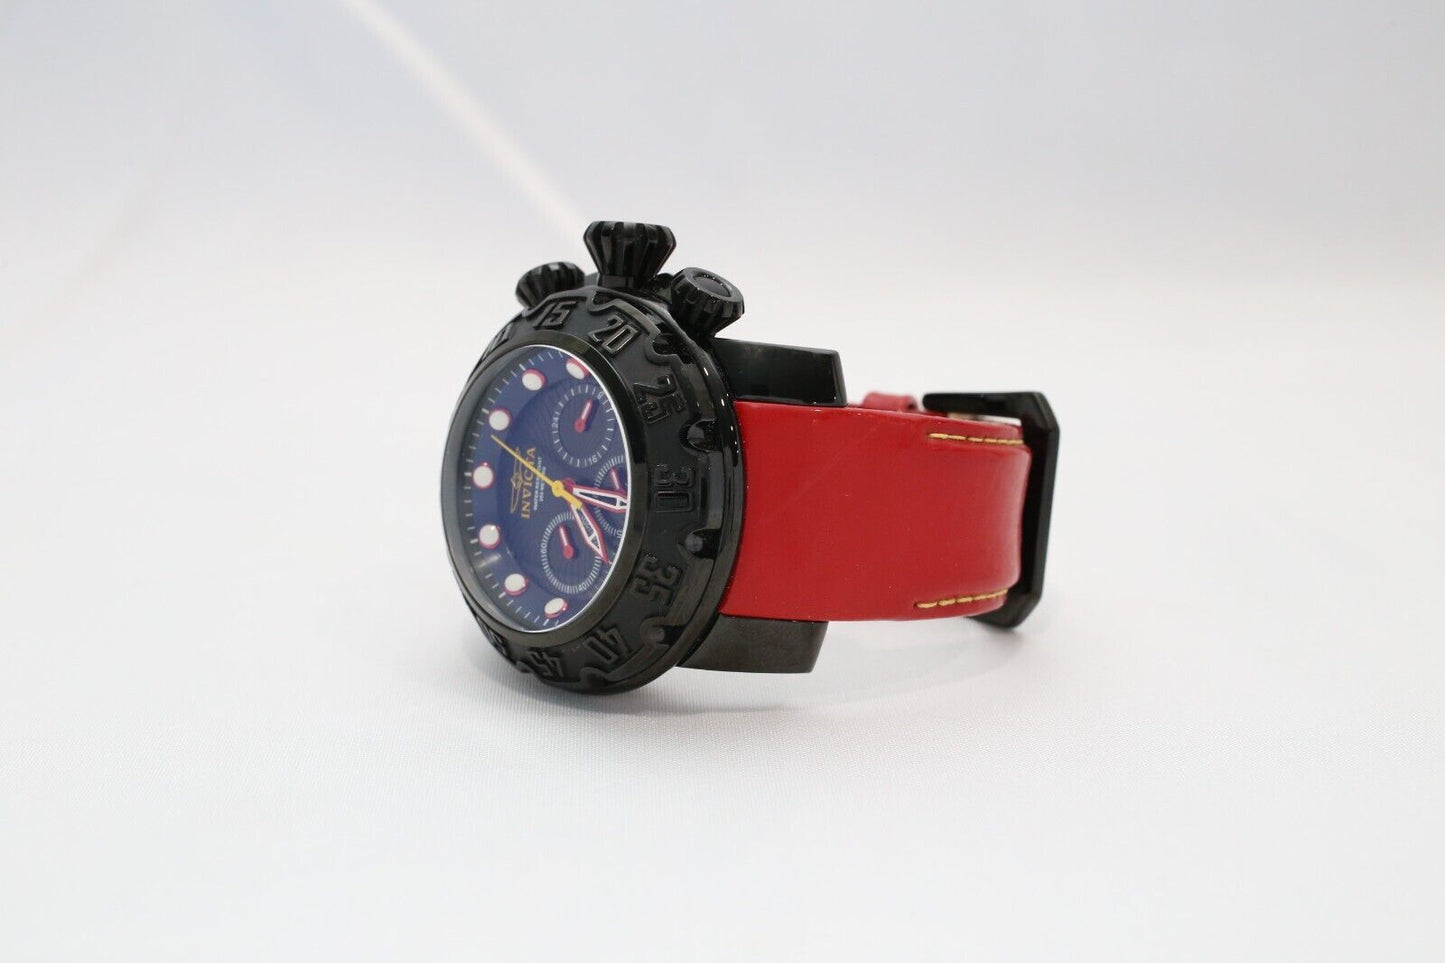 Invicta Lupah Men's Red 52mm Watch Model 22490